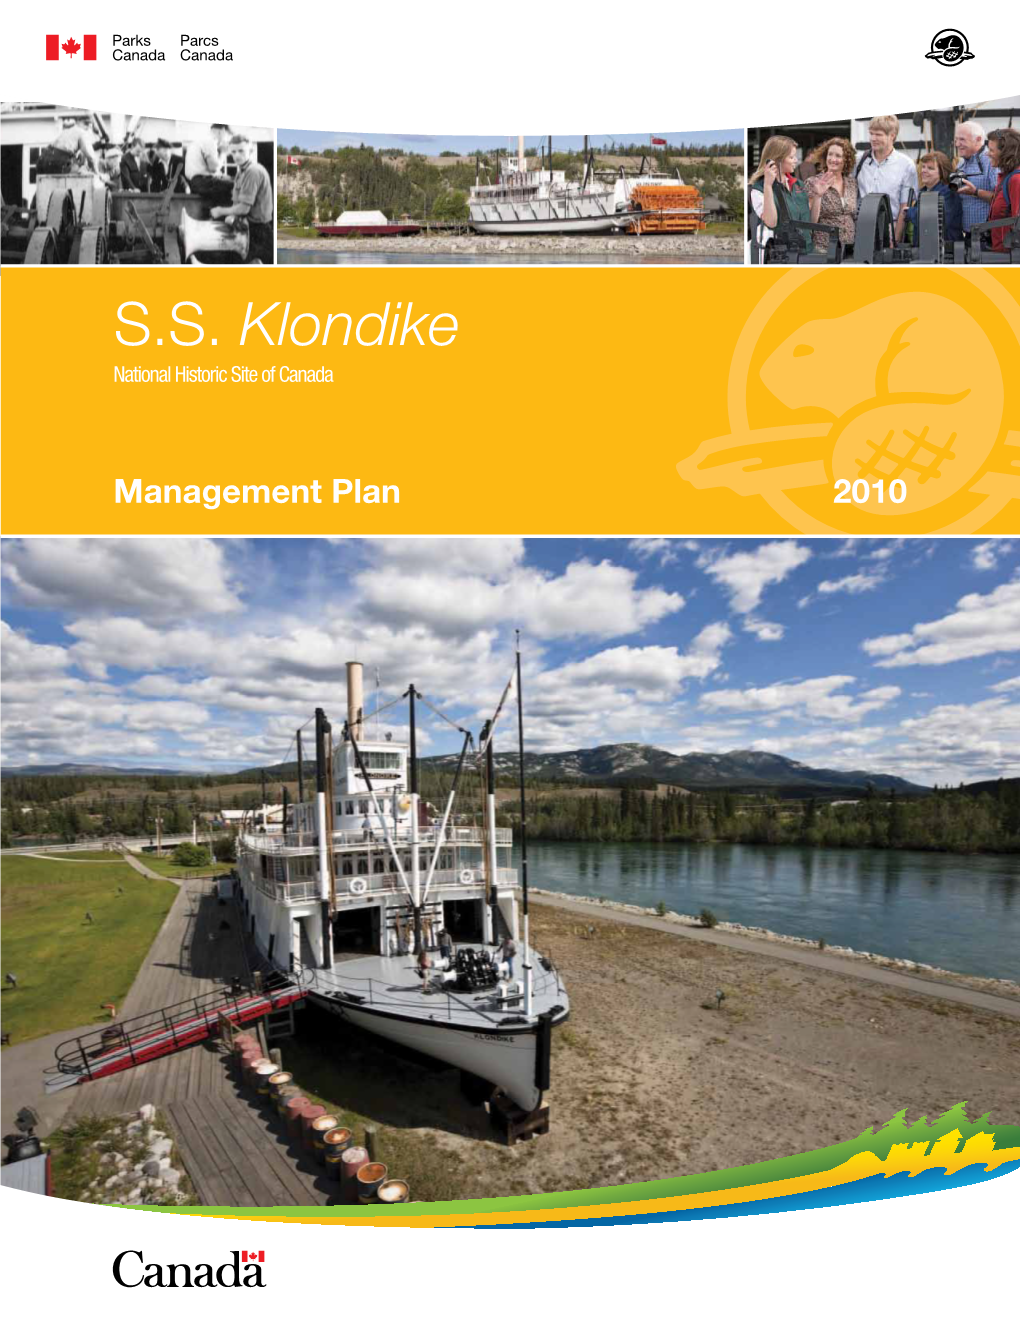 S.S. Klondike Management Plan